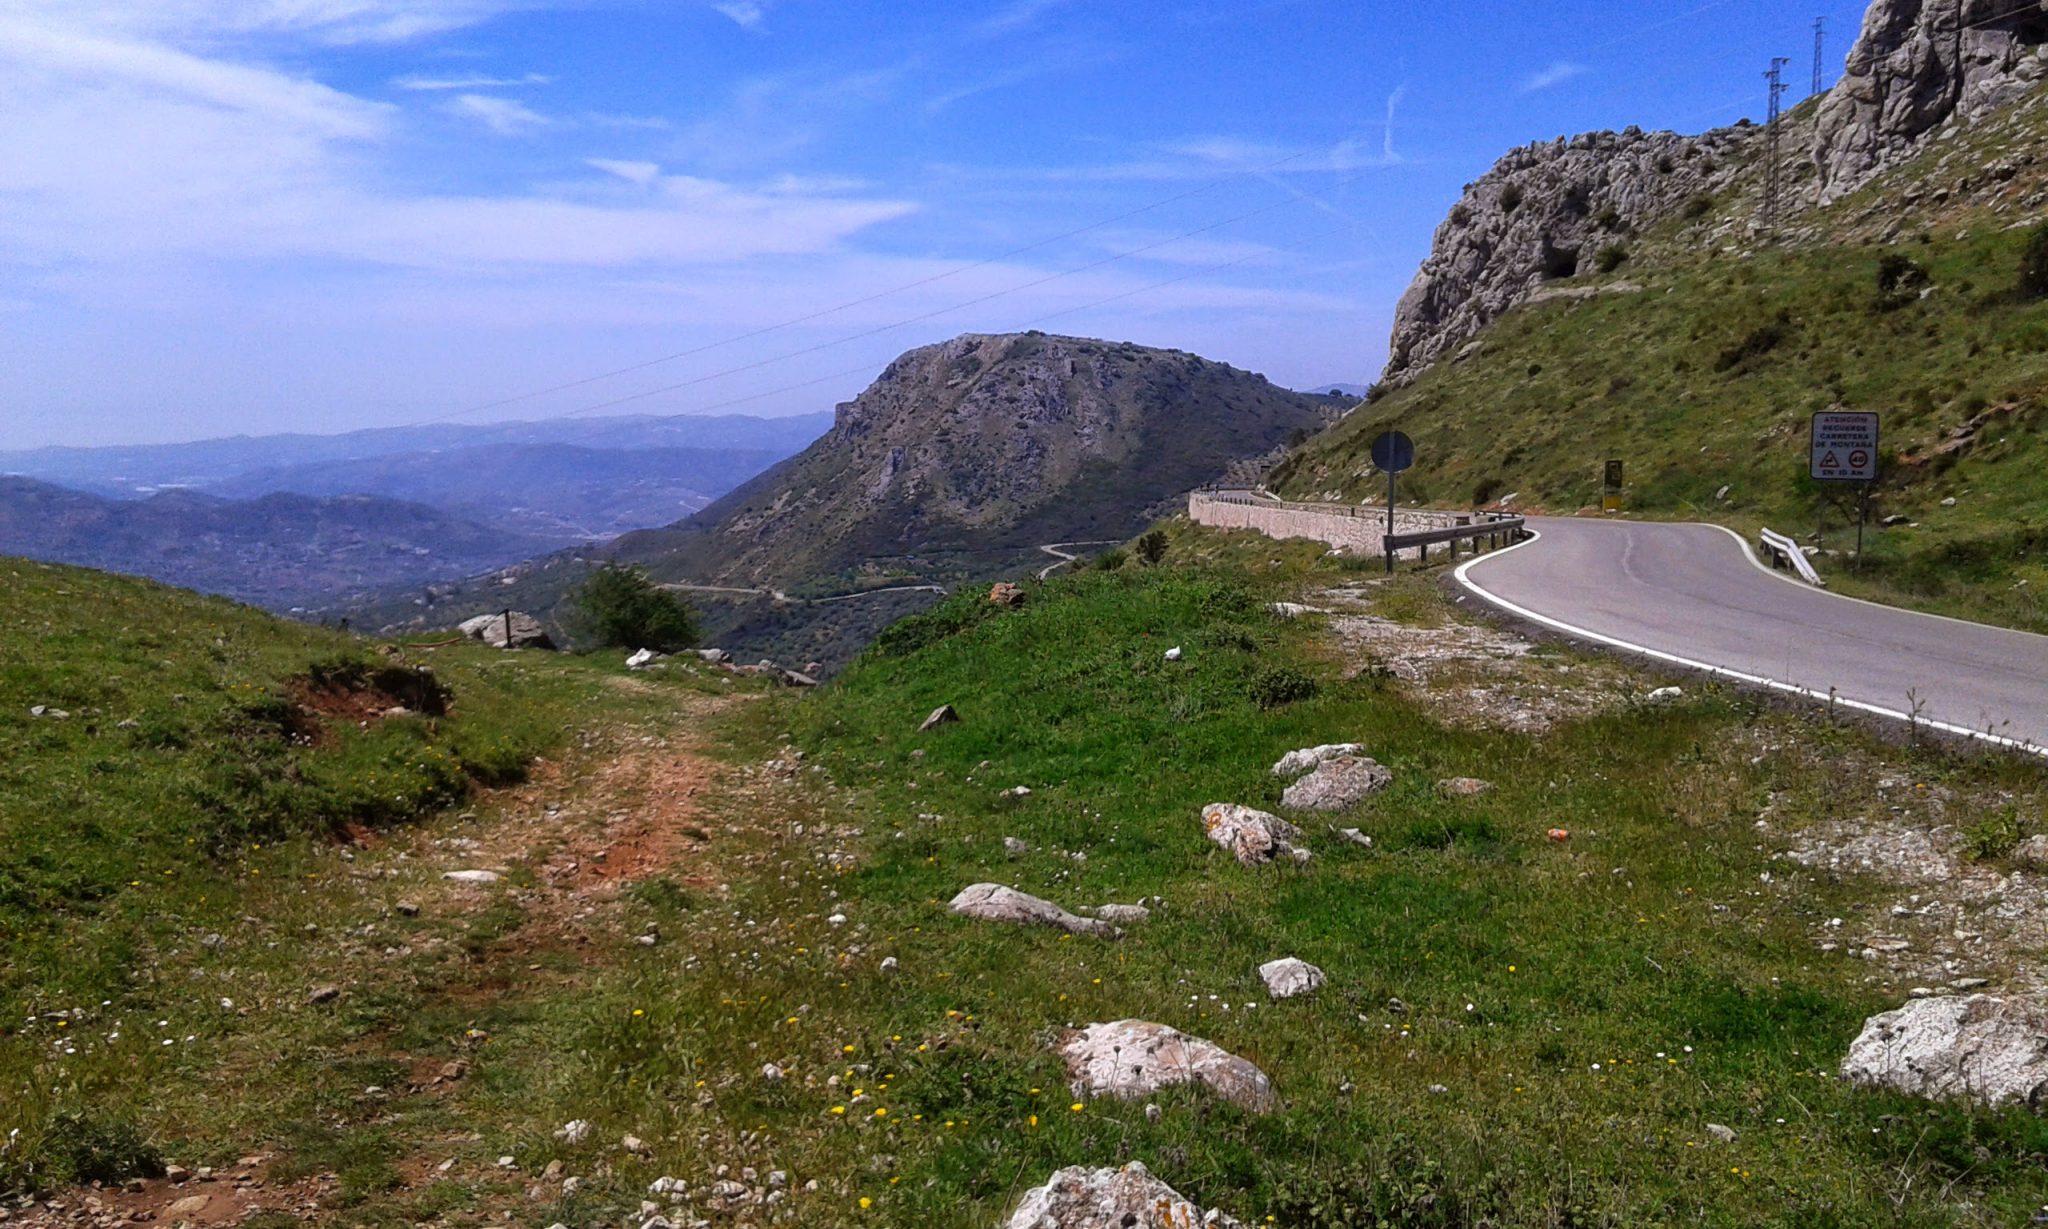 Road Cycling in Spain's Mediterranean Coast